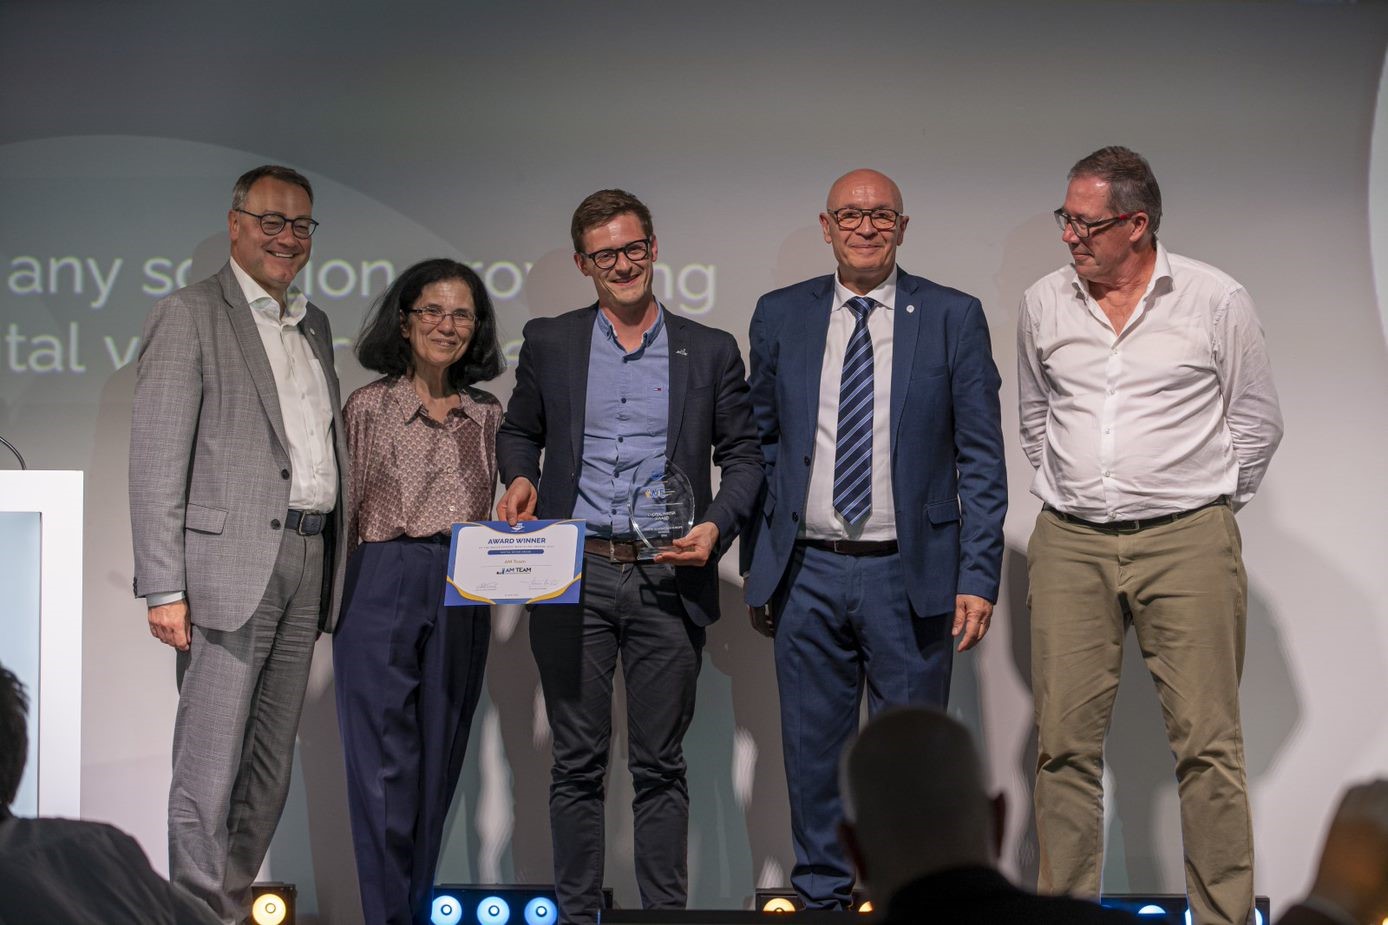 AM-Team neemt de Digital Water Award in ontvangst